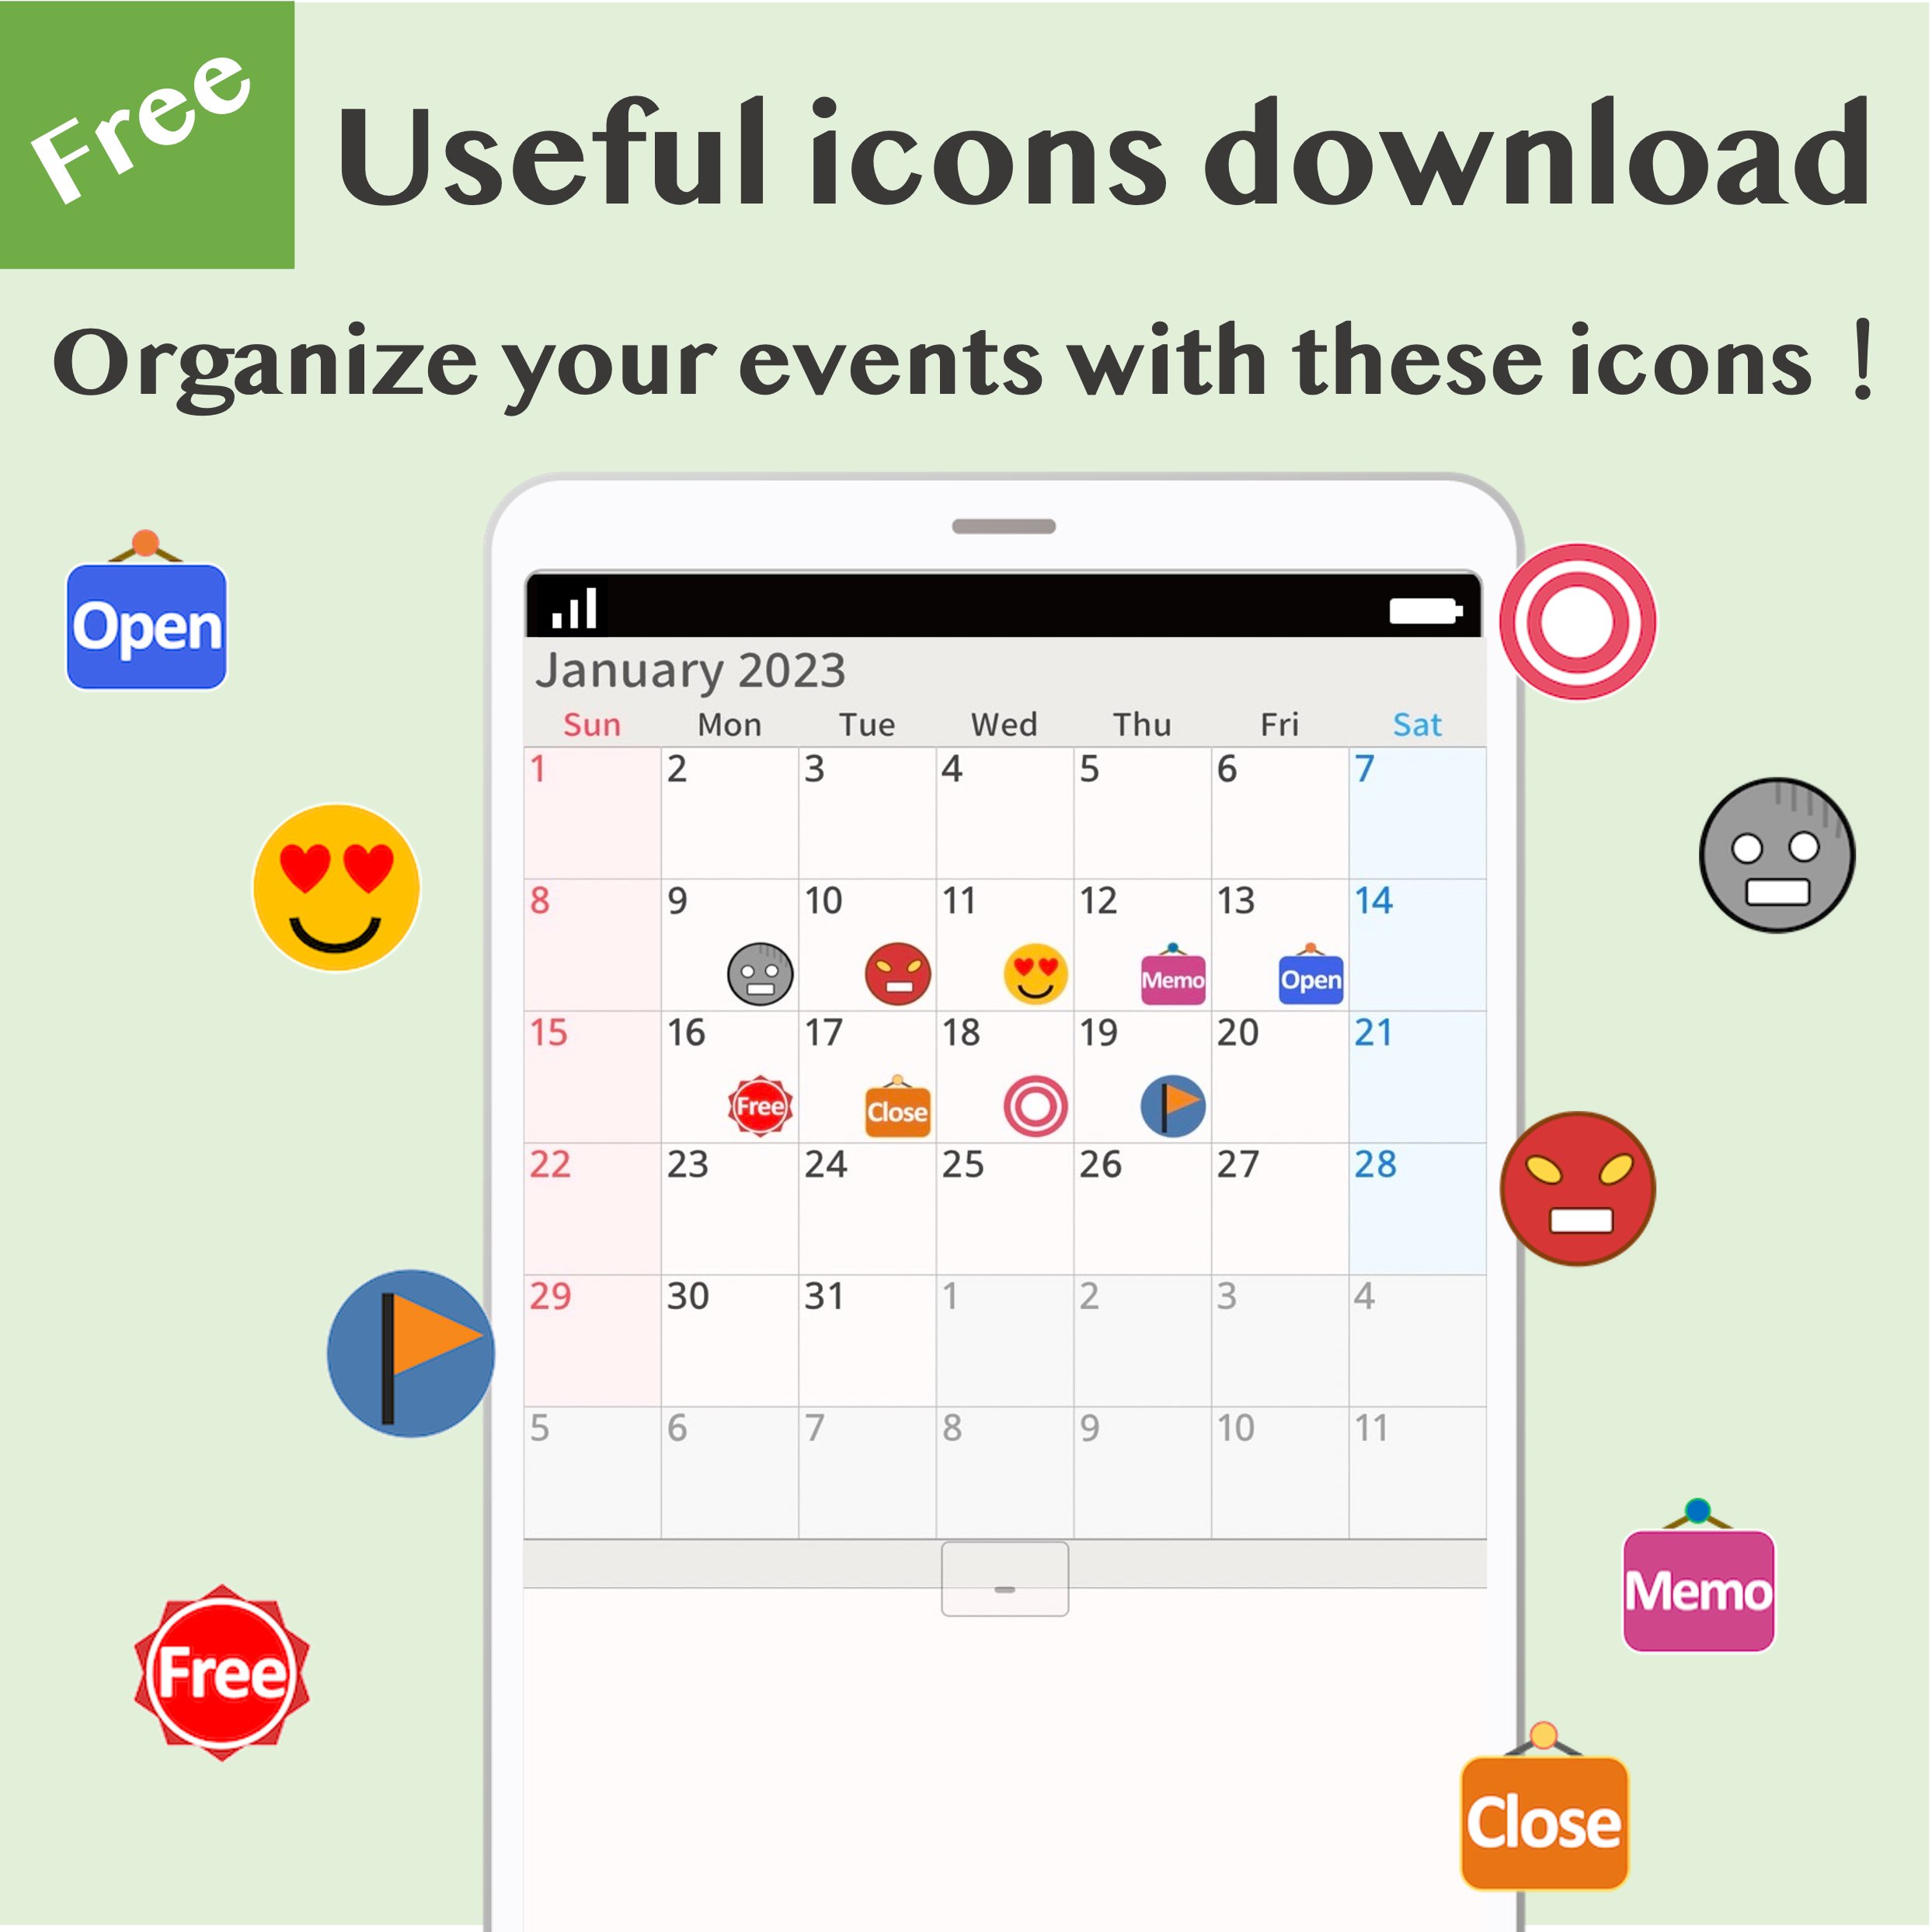 Cute Ios App Icons 150 Kawaii Cats Icon Bundle App (Instant Download) 